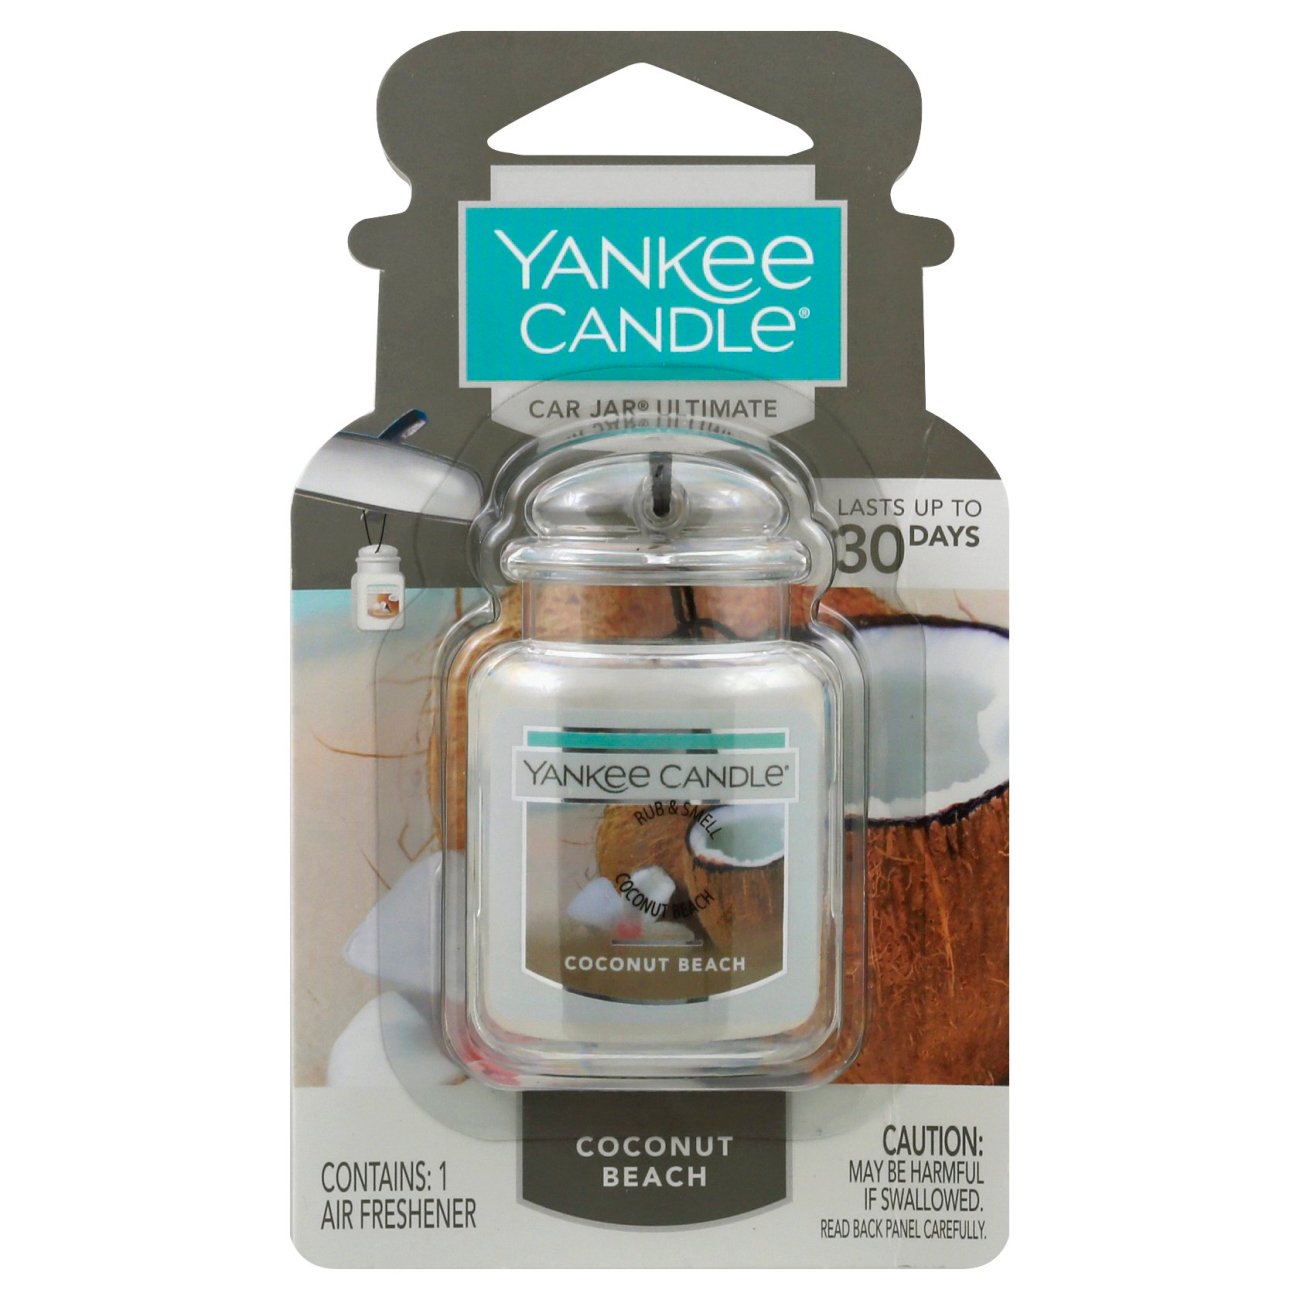 Yankee Candle Lemon Lavender Car Jar Air Freshener Pack of 3